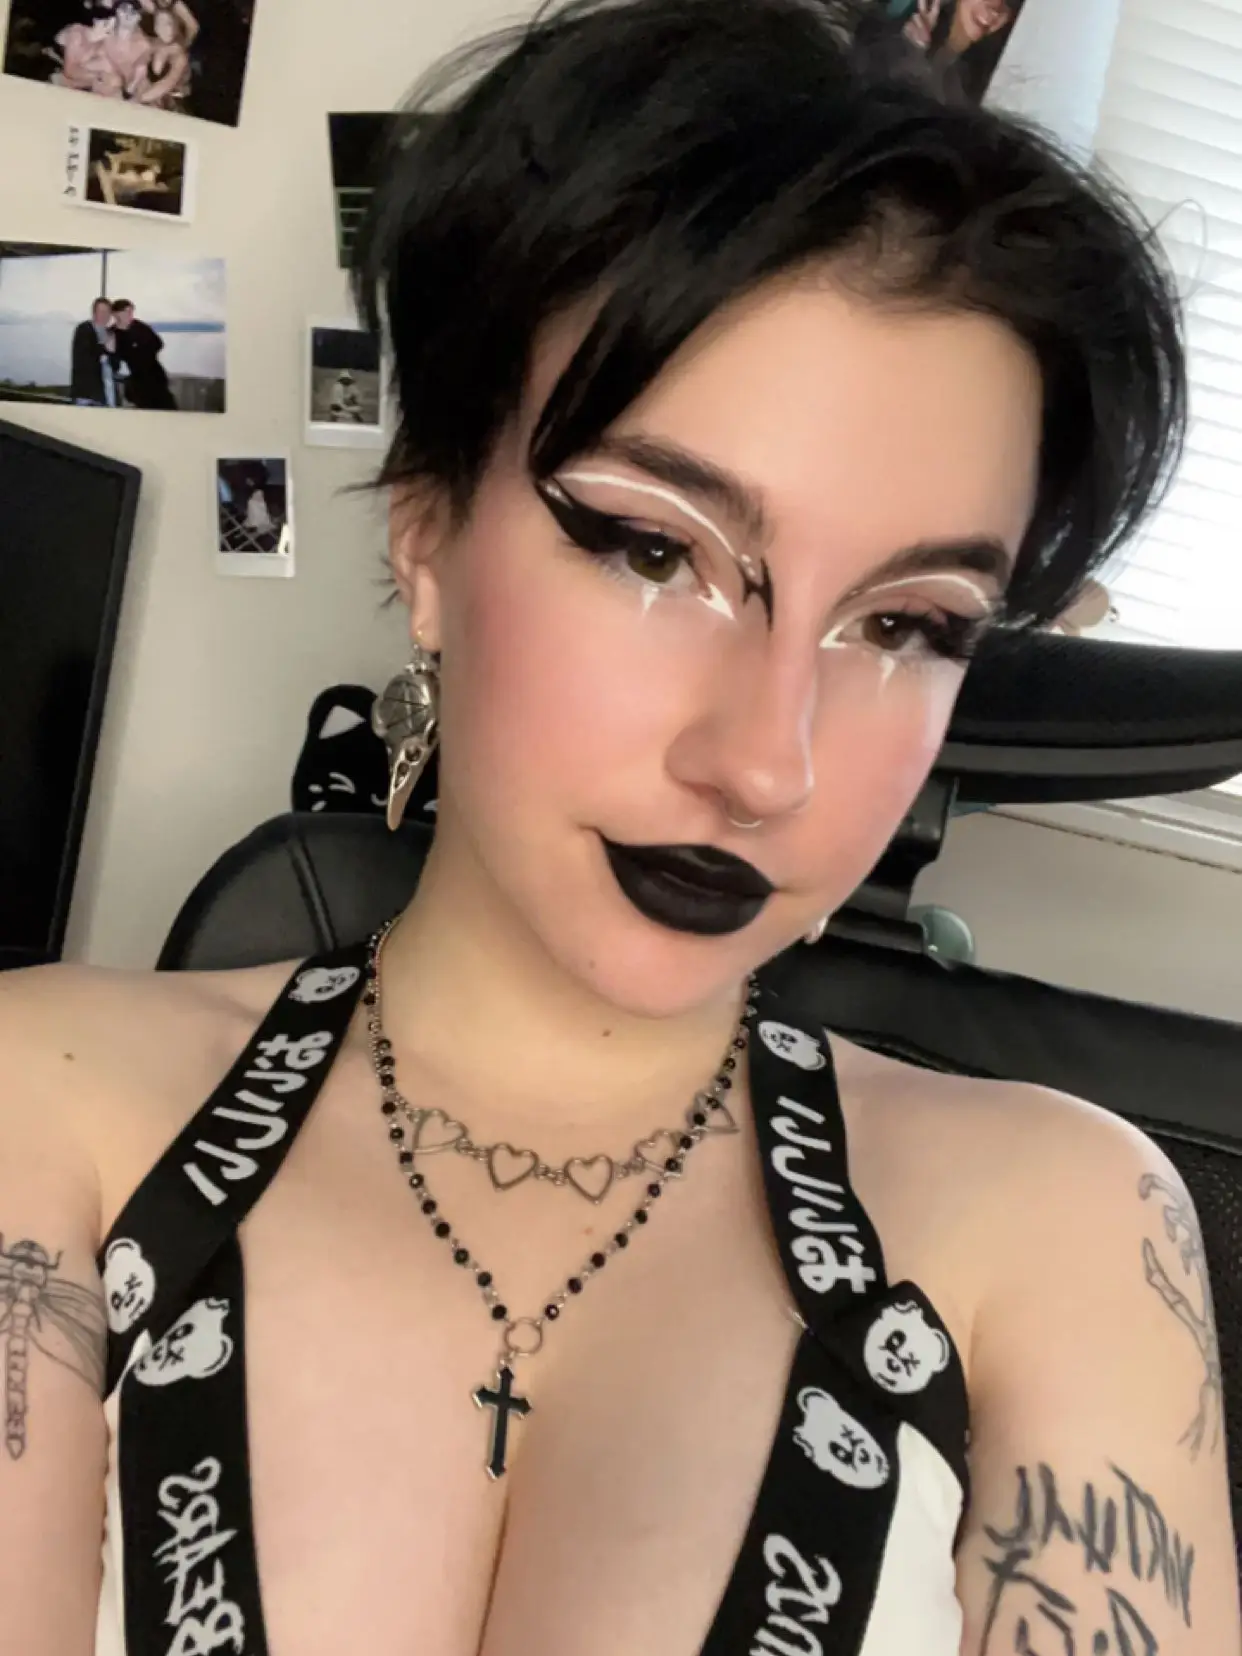 I'm big titty goth gf irl | Gallery posted by Hannah | Lemon8